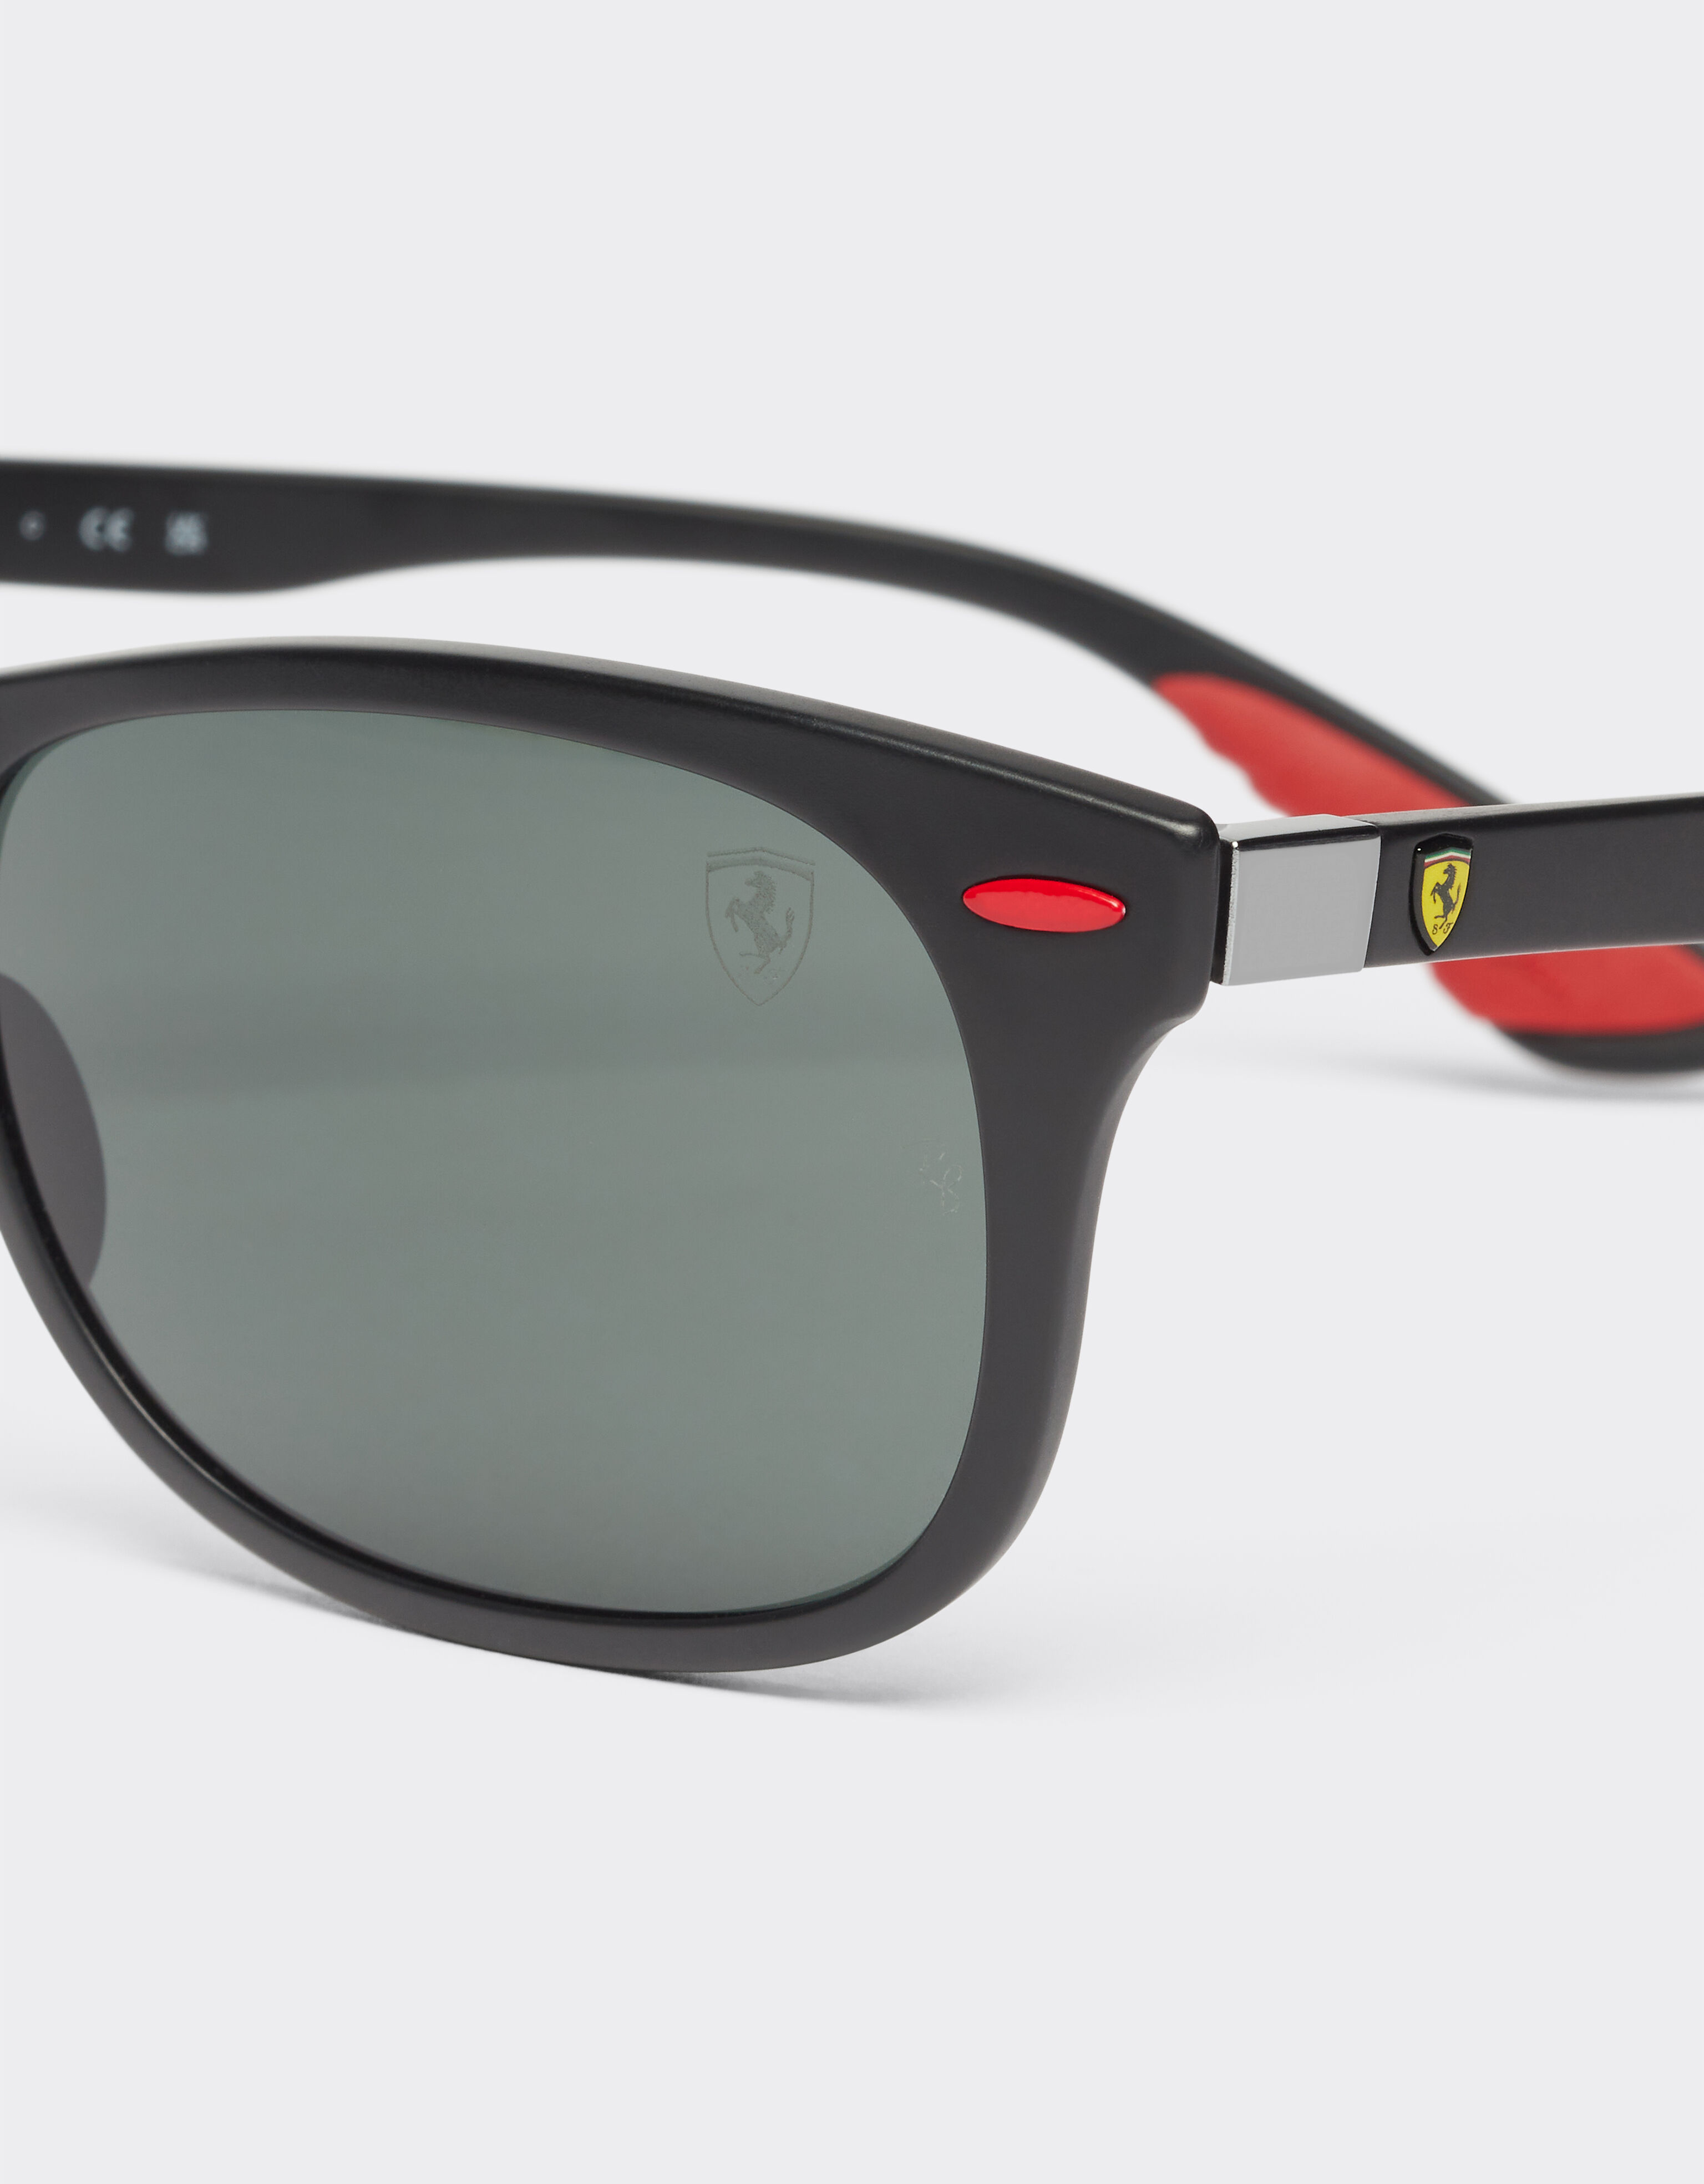 Ferrari Ray-Ban for Scuderia Ferrari 0RB4607M black sunglasses with dark green lenses Black Matt F1296f